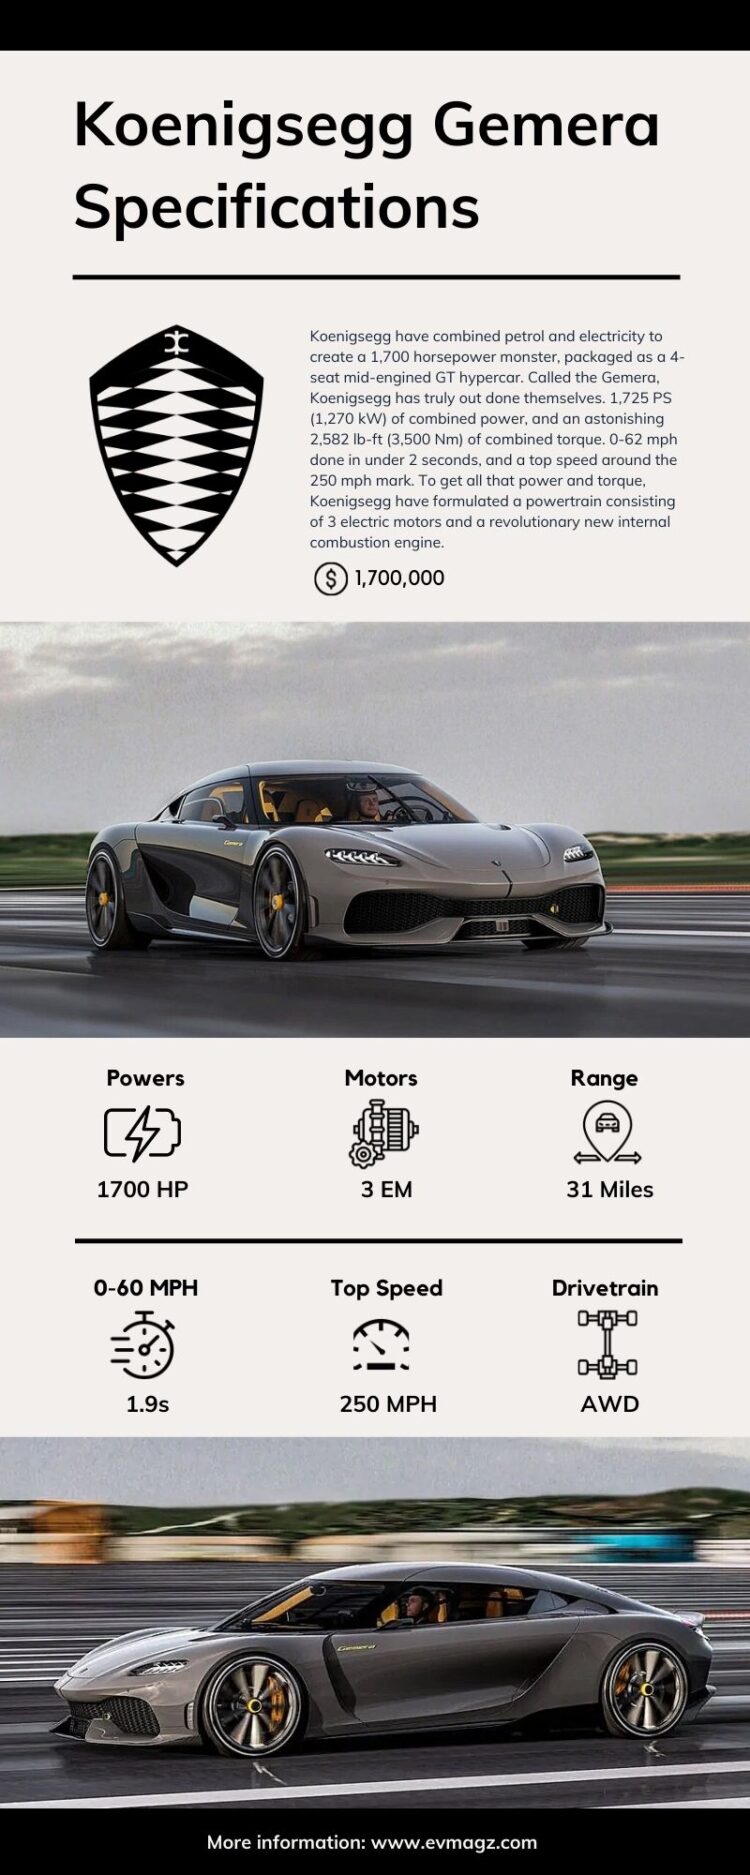 Koenigsegg Gemera Price and Specifications